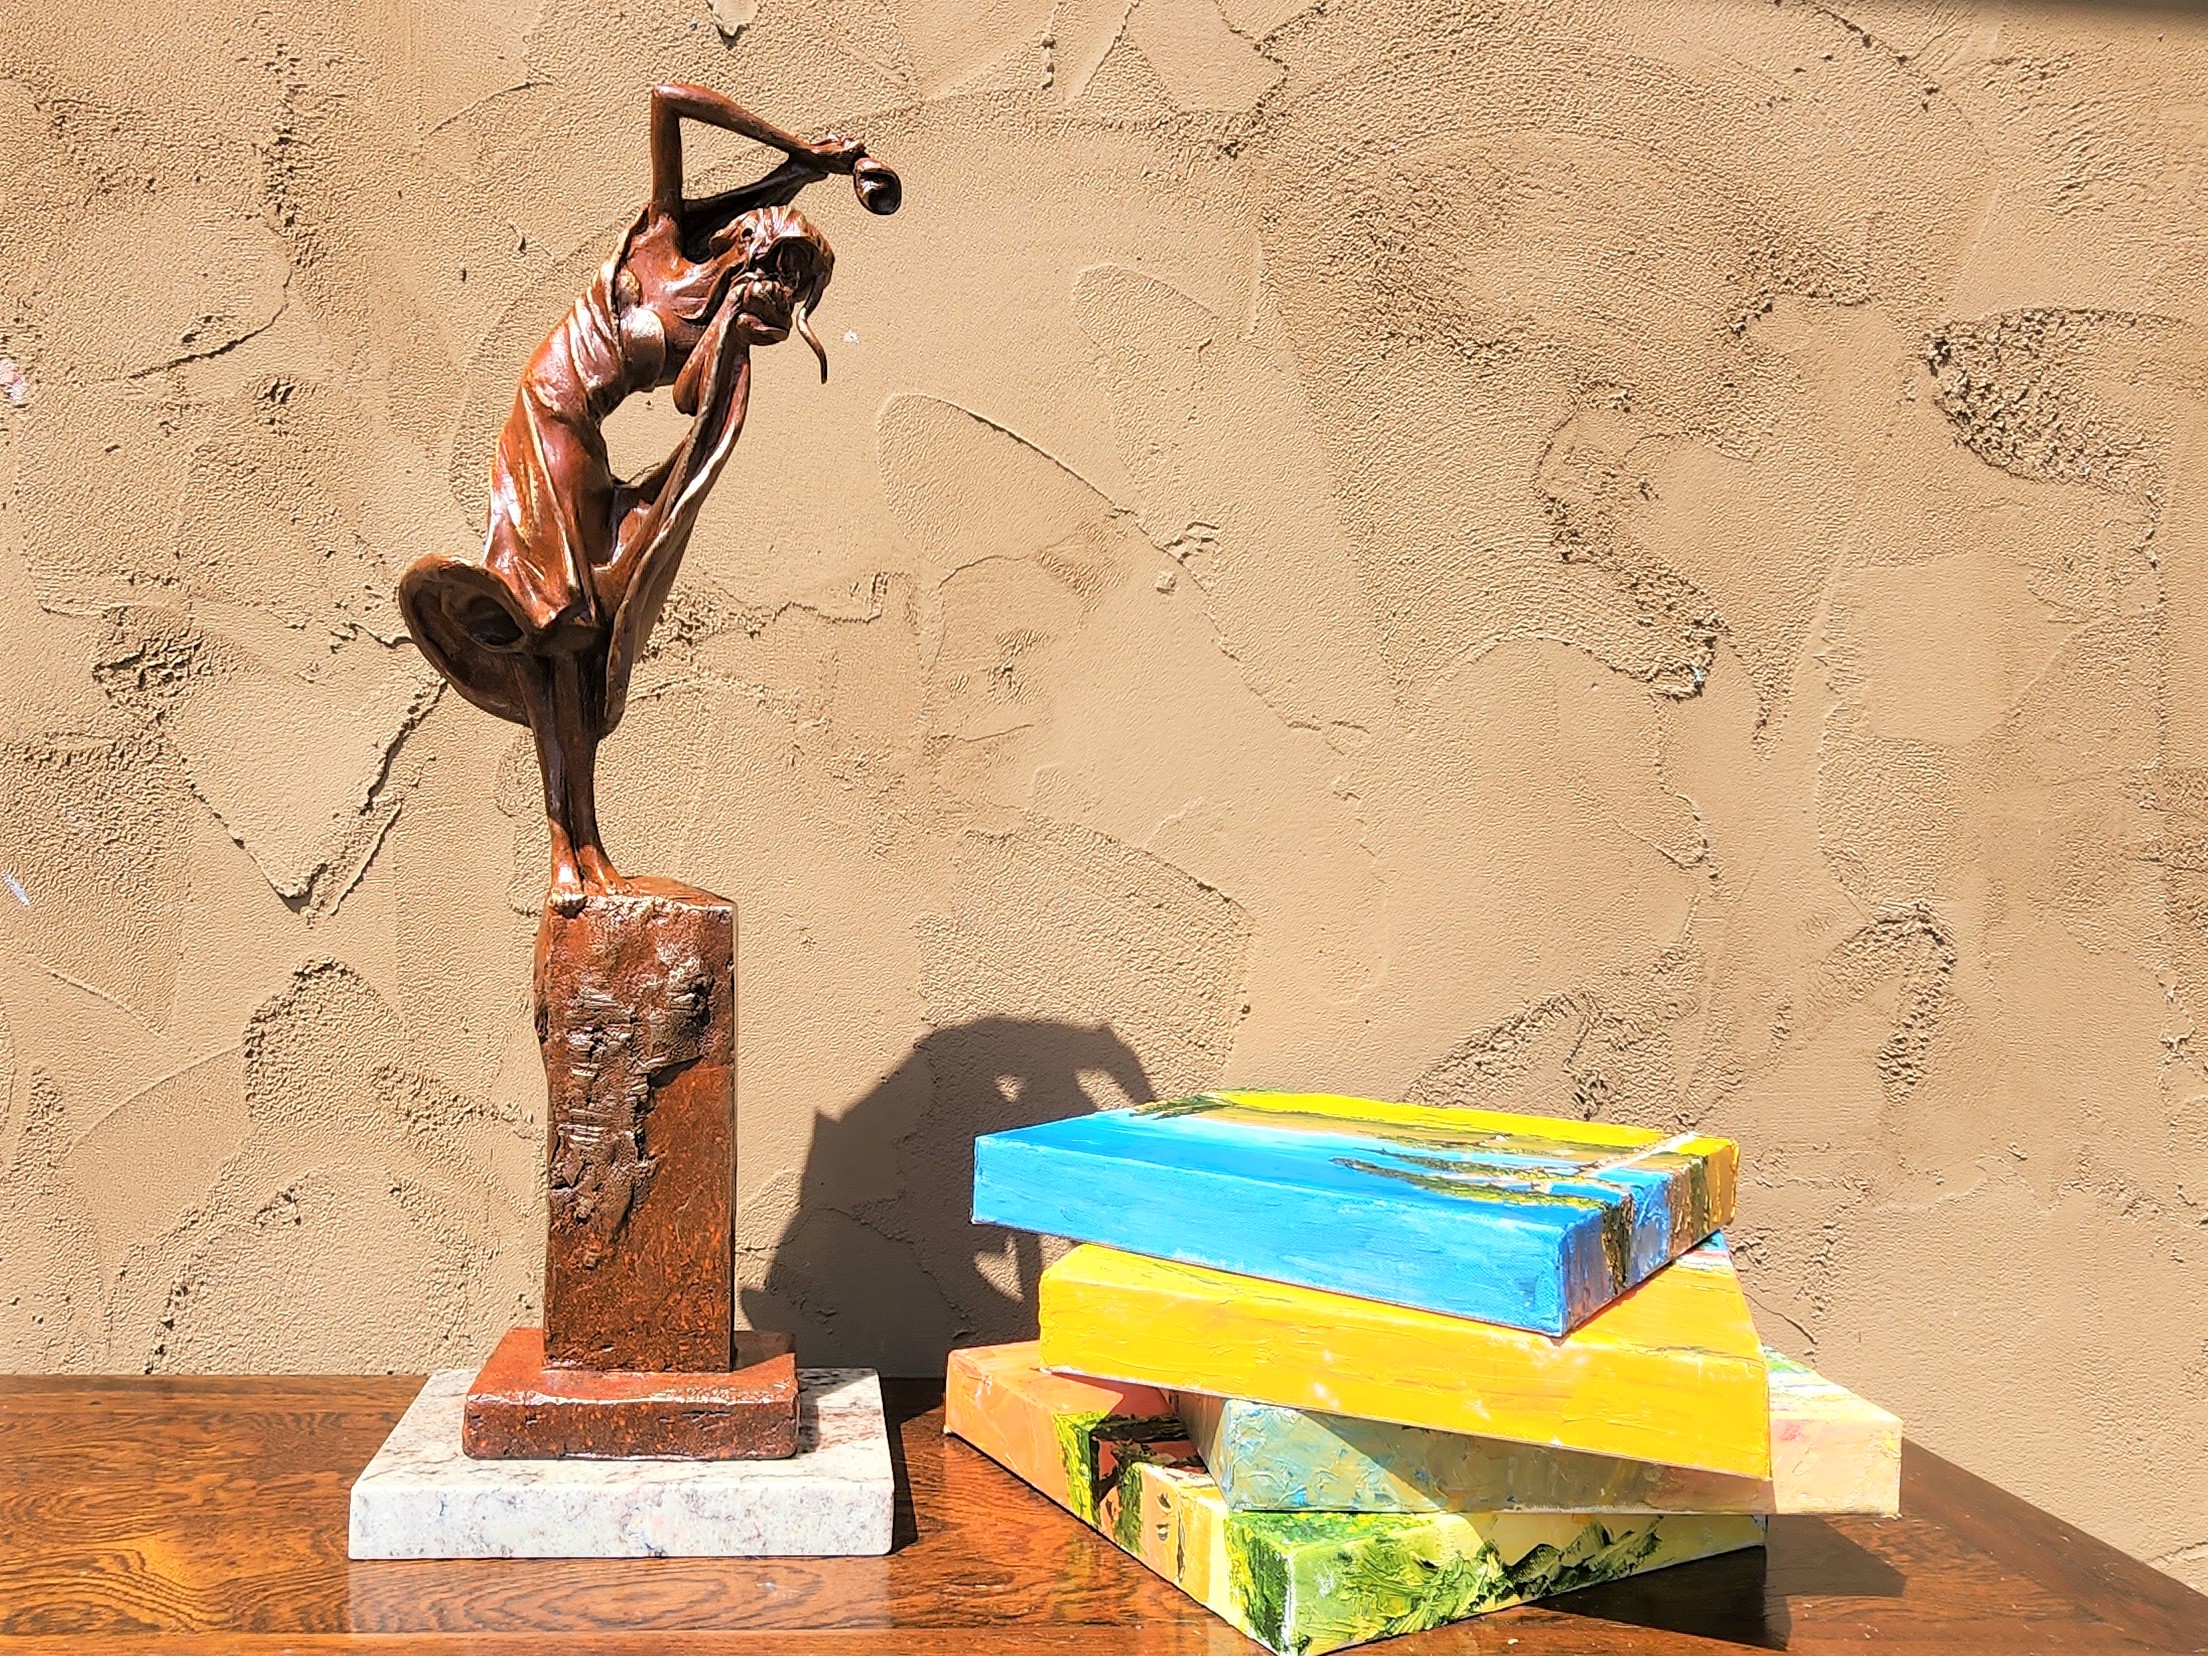 beautiful elegant bronze dancer girl woman female figurative sculpture art like MacDonald or Bradley